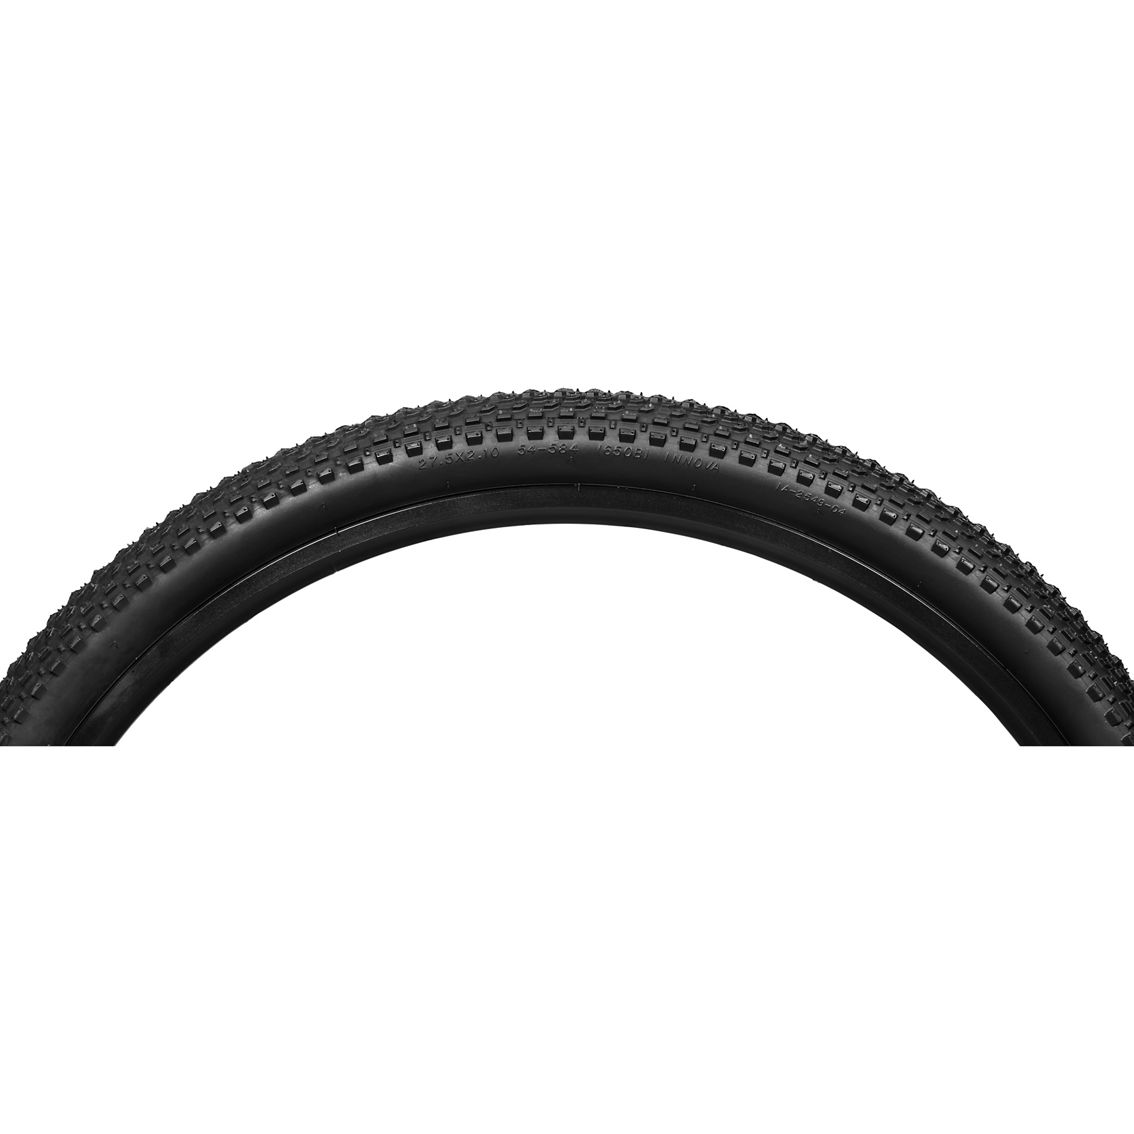 Schwinn 27.5 in. Puncture Guard Mountain Bike Tire - Image 2 of 8